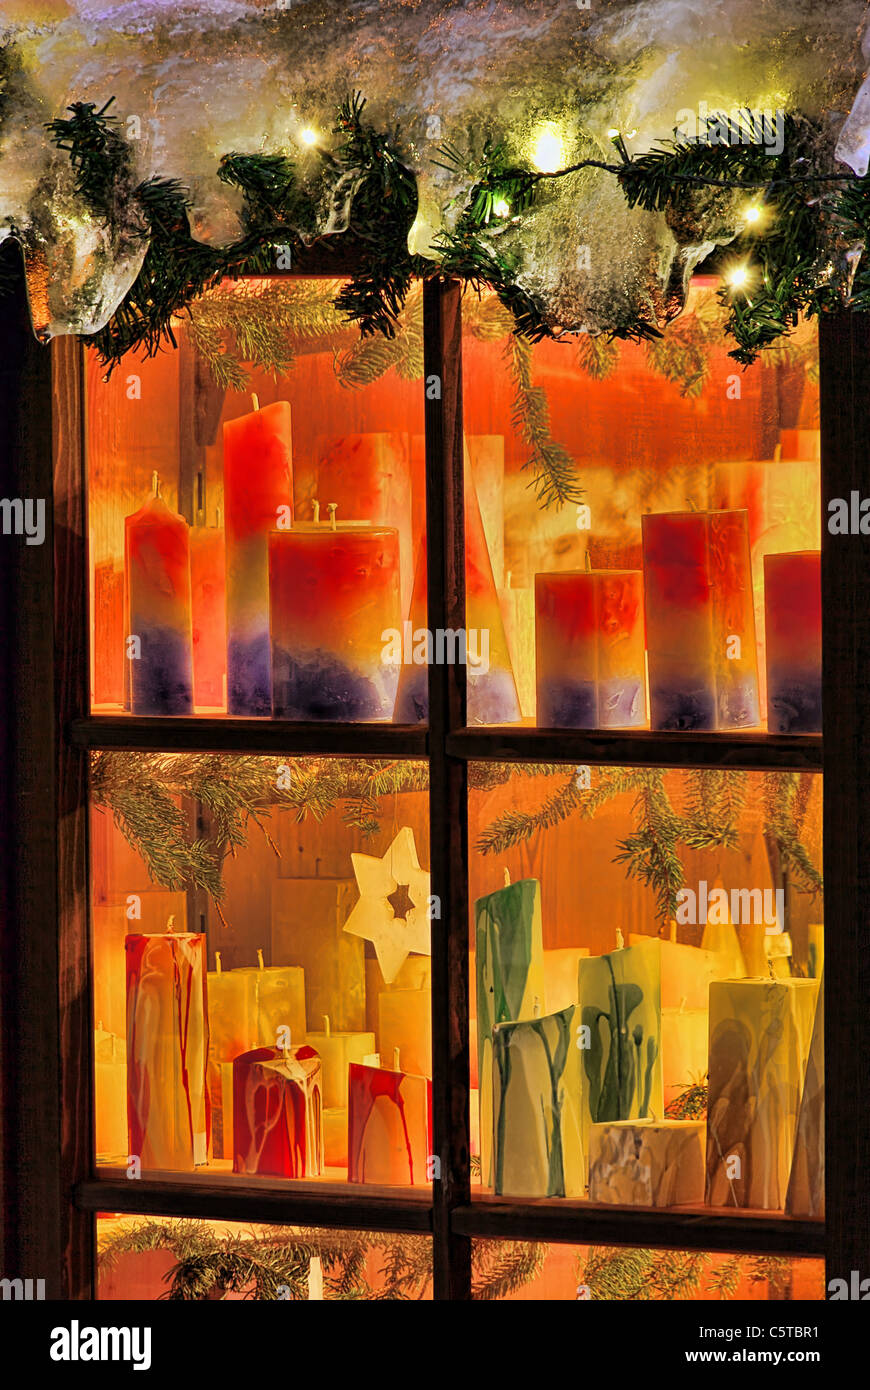 Kerzen im Fenster - candle in window 02 Stock Photo